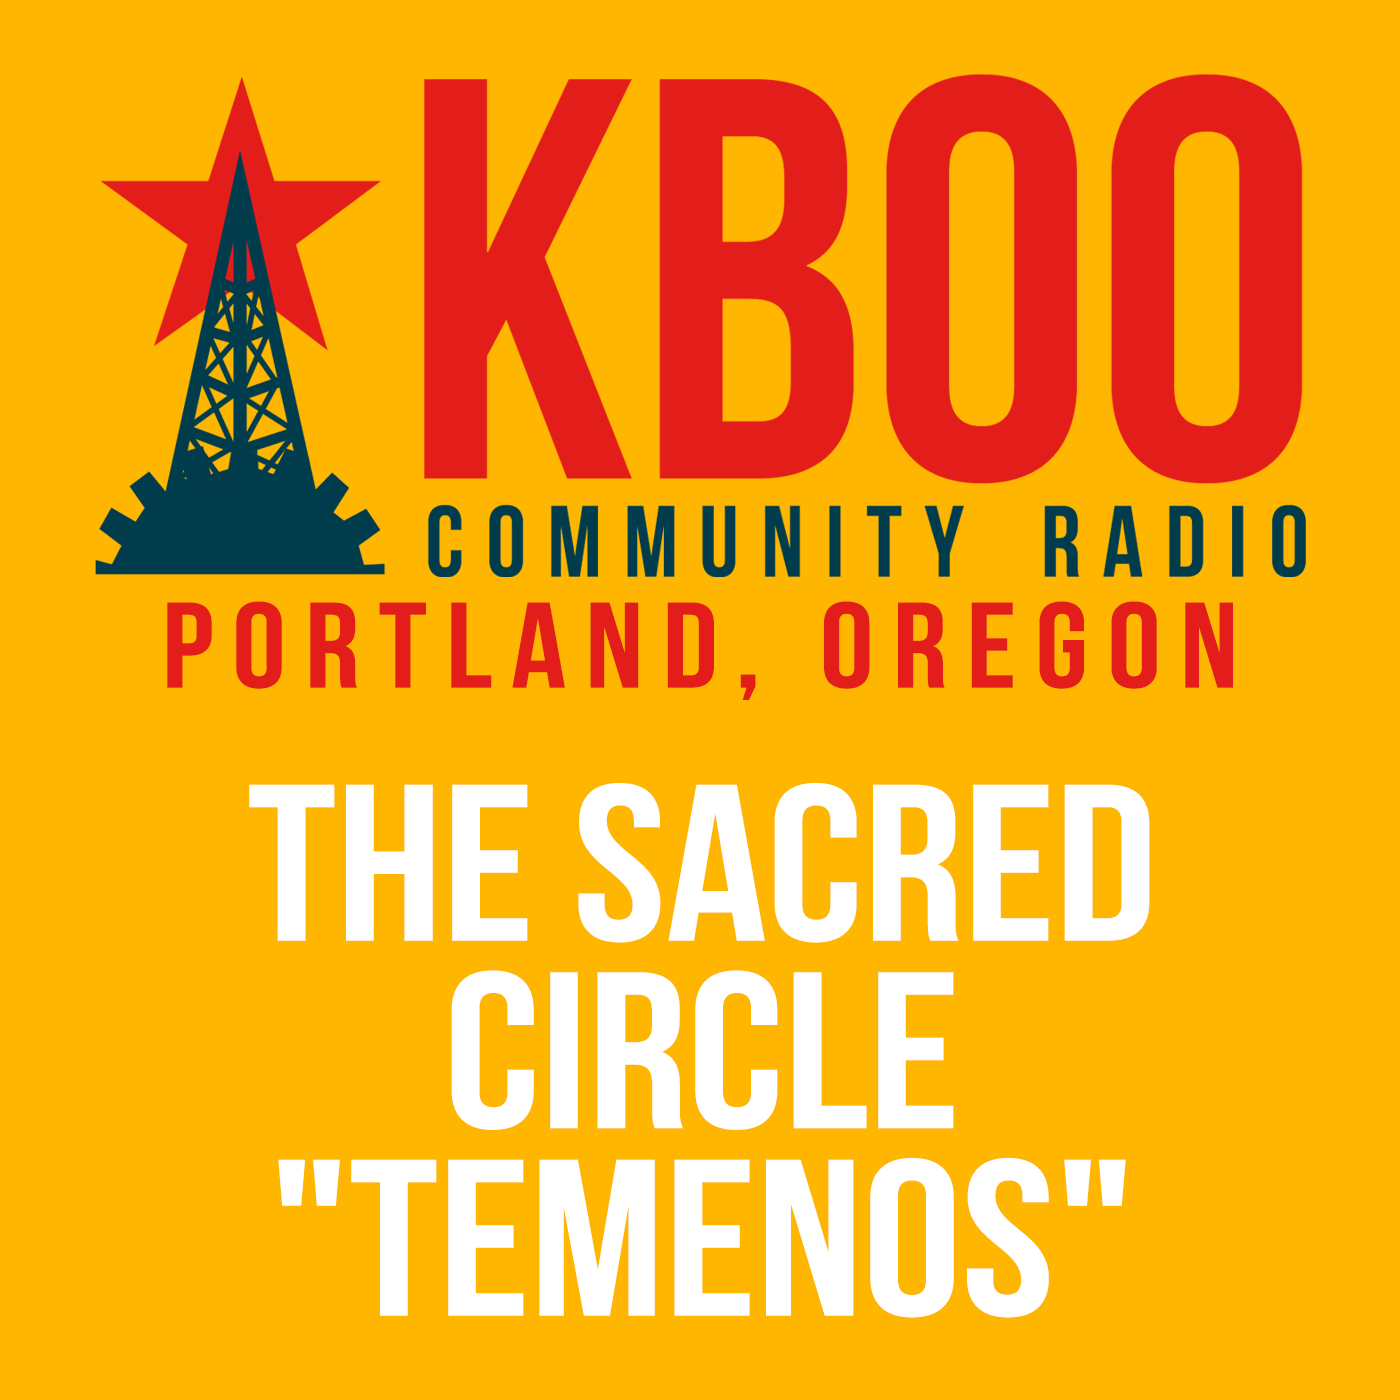 The Sacred Circle "TEMENOS" on 01/19/24